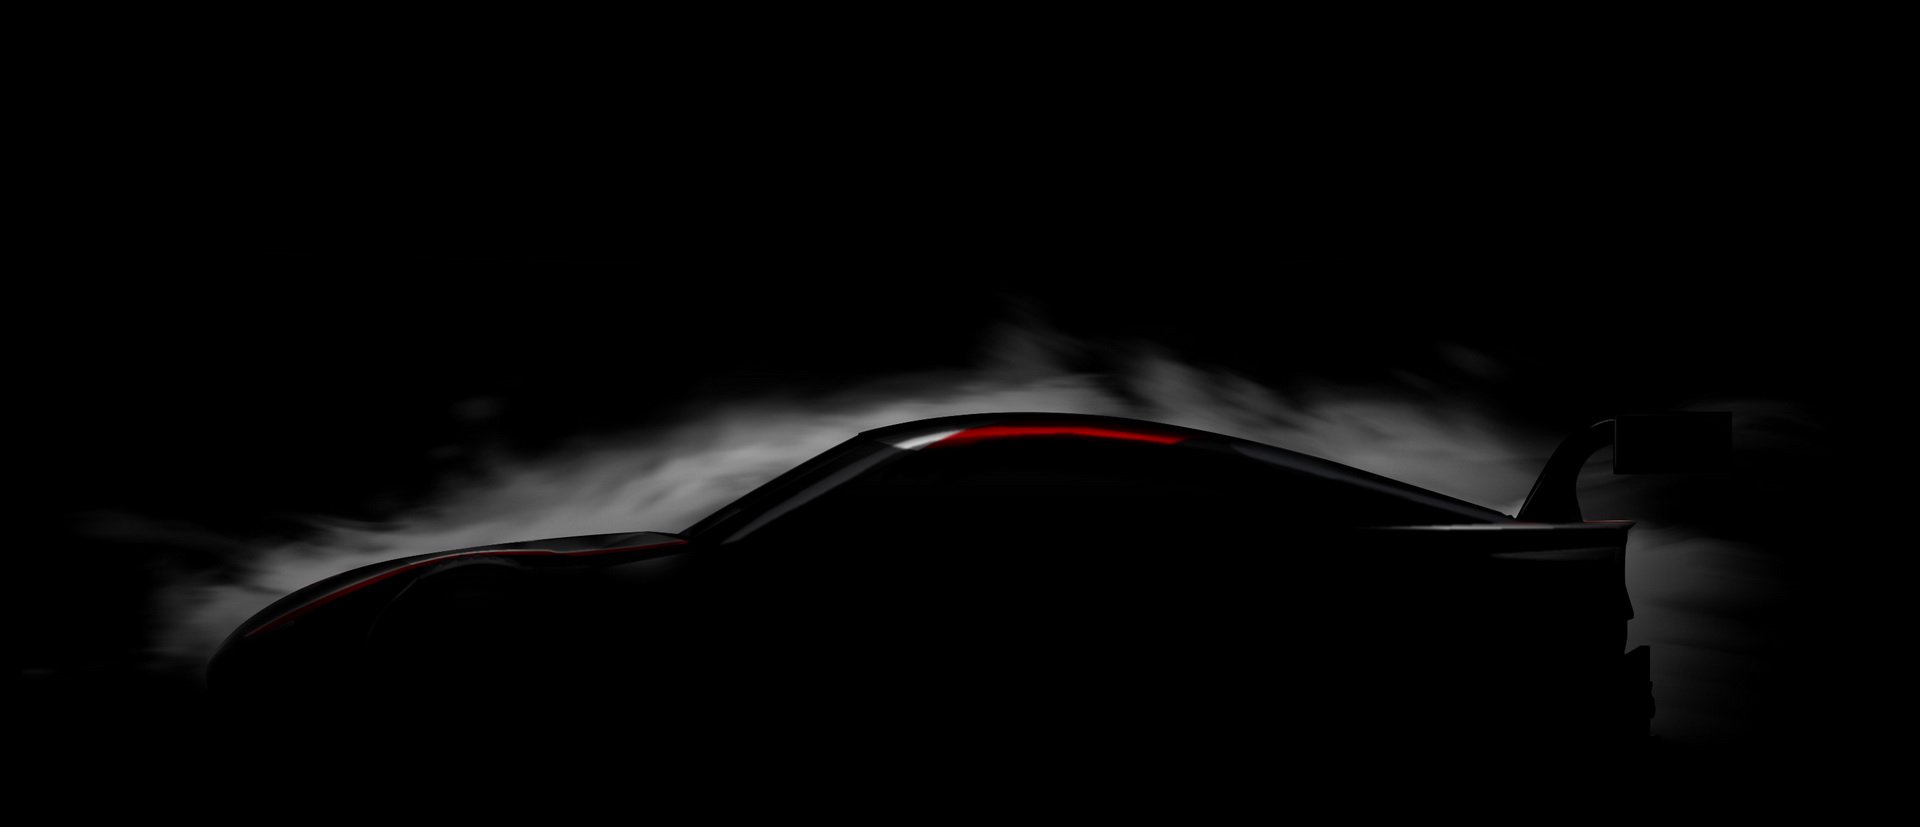 International, toyota gr supra super gt tokyo auto salon: Sosok Asli Toyota Supra 2020 Akhirnya Mencuat!